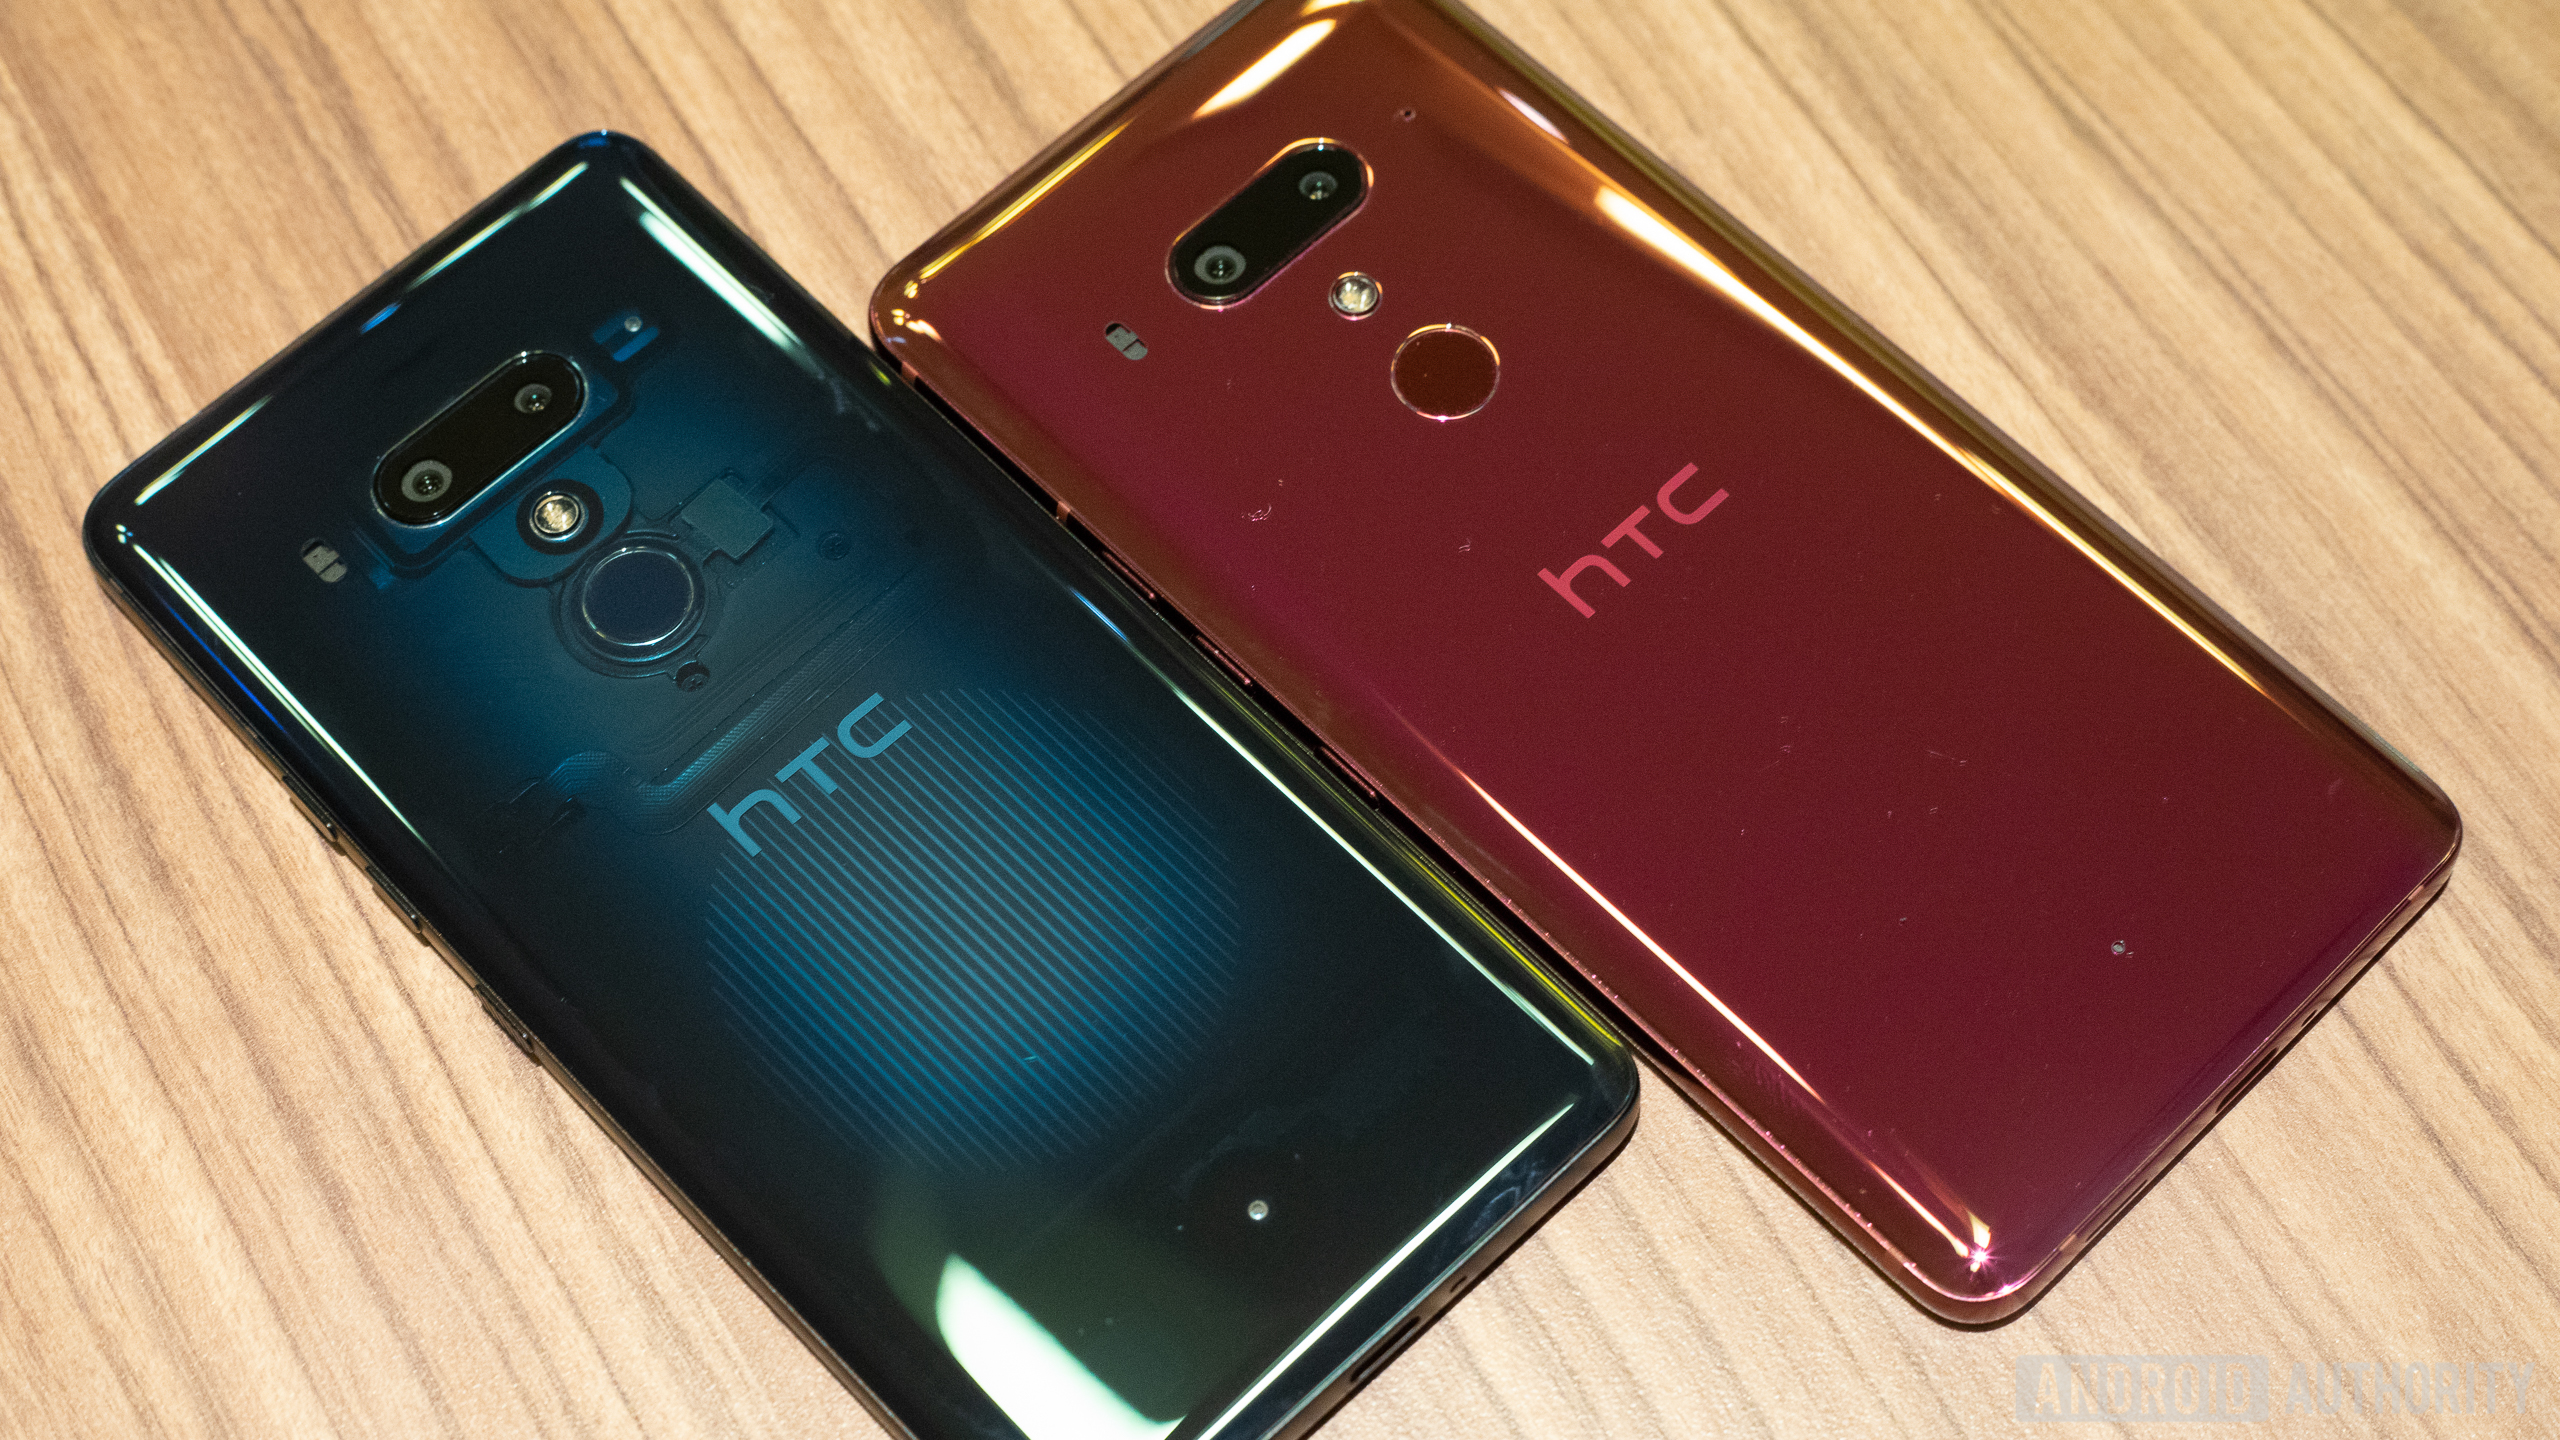 A blue HTCU12 Plus smartphone and a red HTCU12 Plus smartphone on a wooden surface.